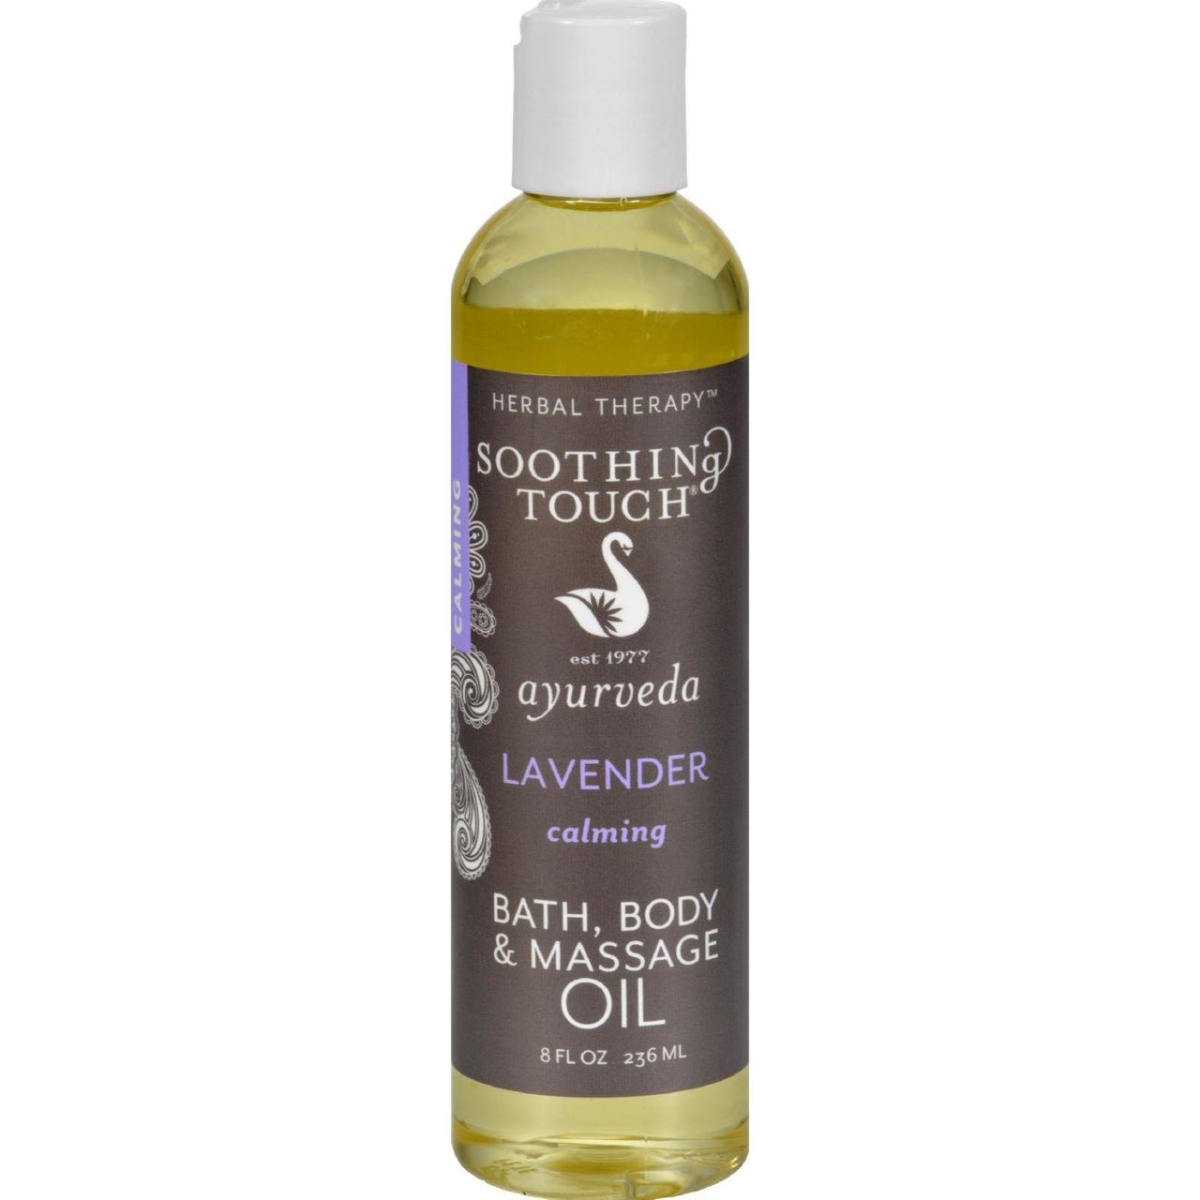 Hg0516914 8 Oz Bath & Body Oil - Lavender